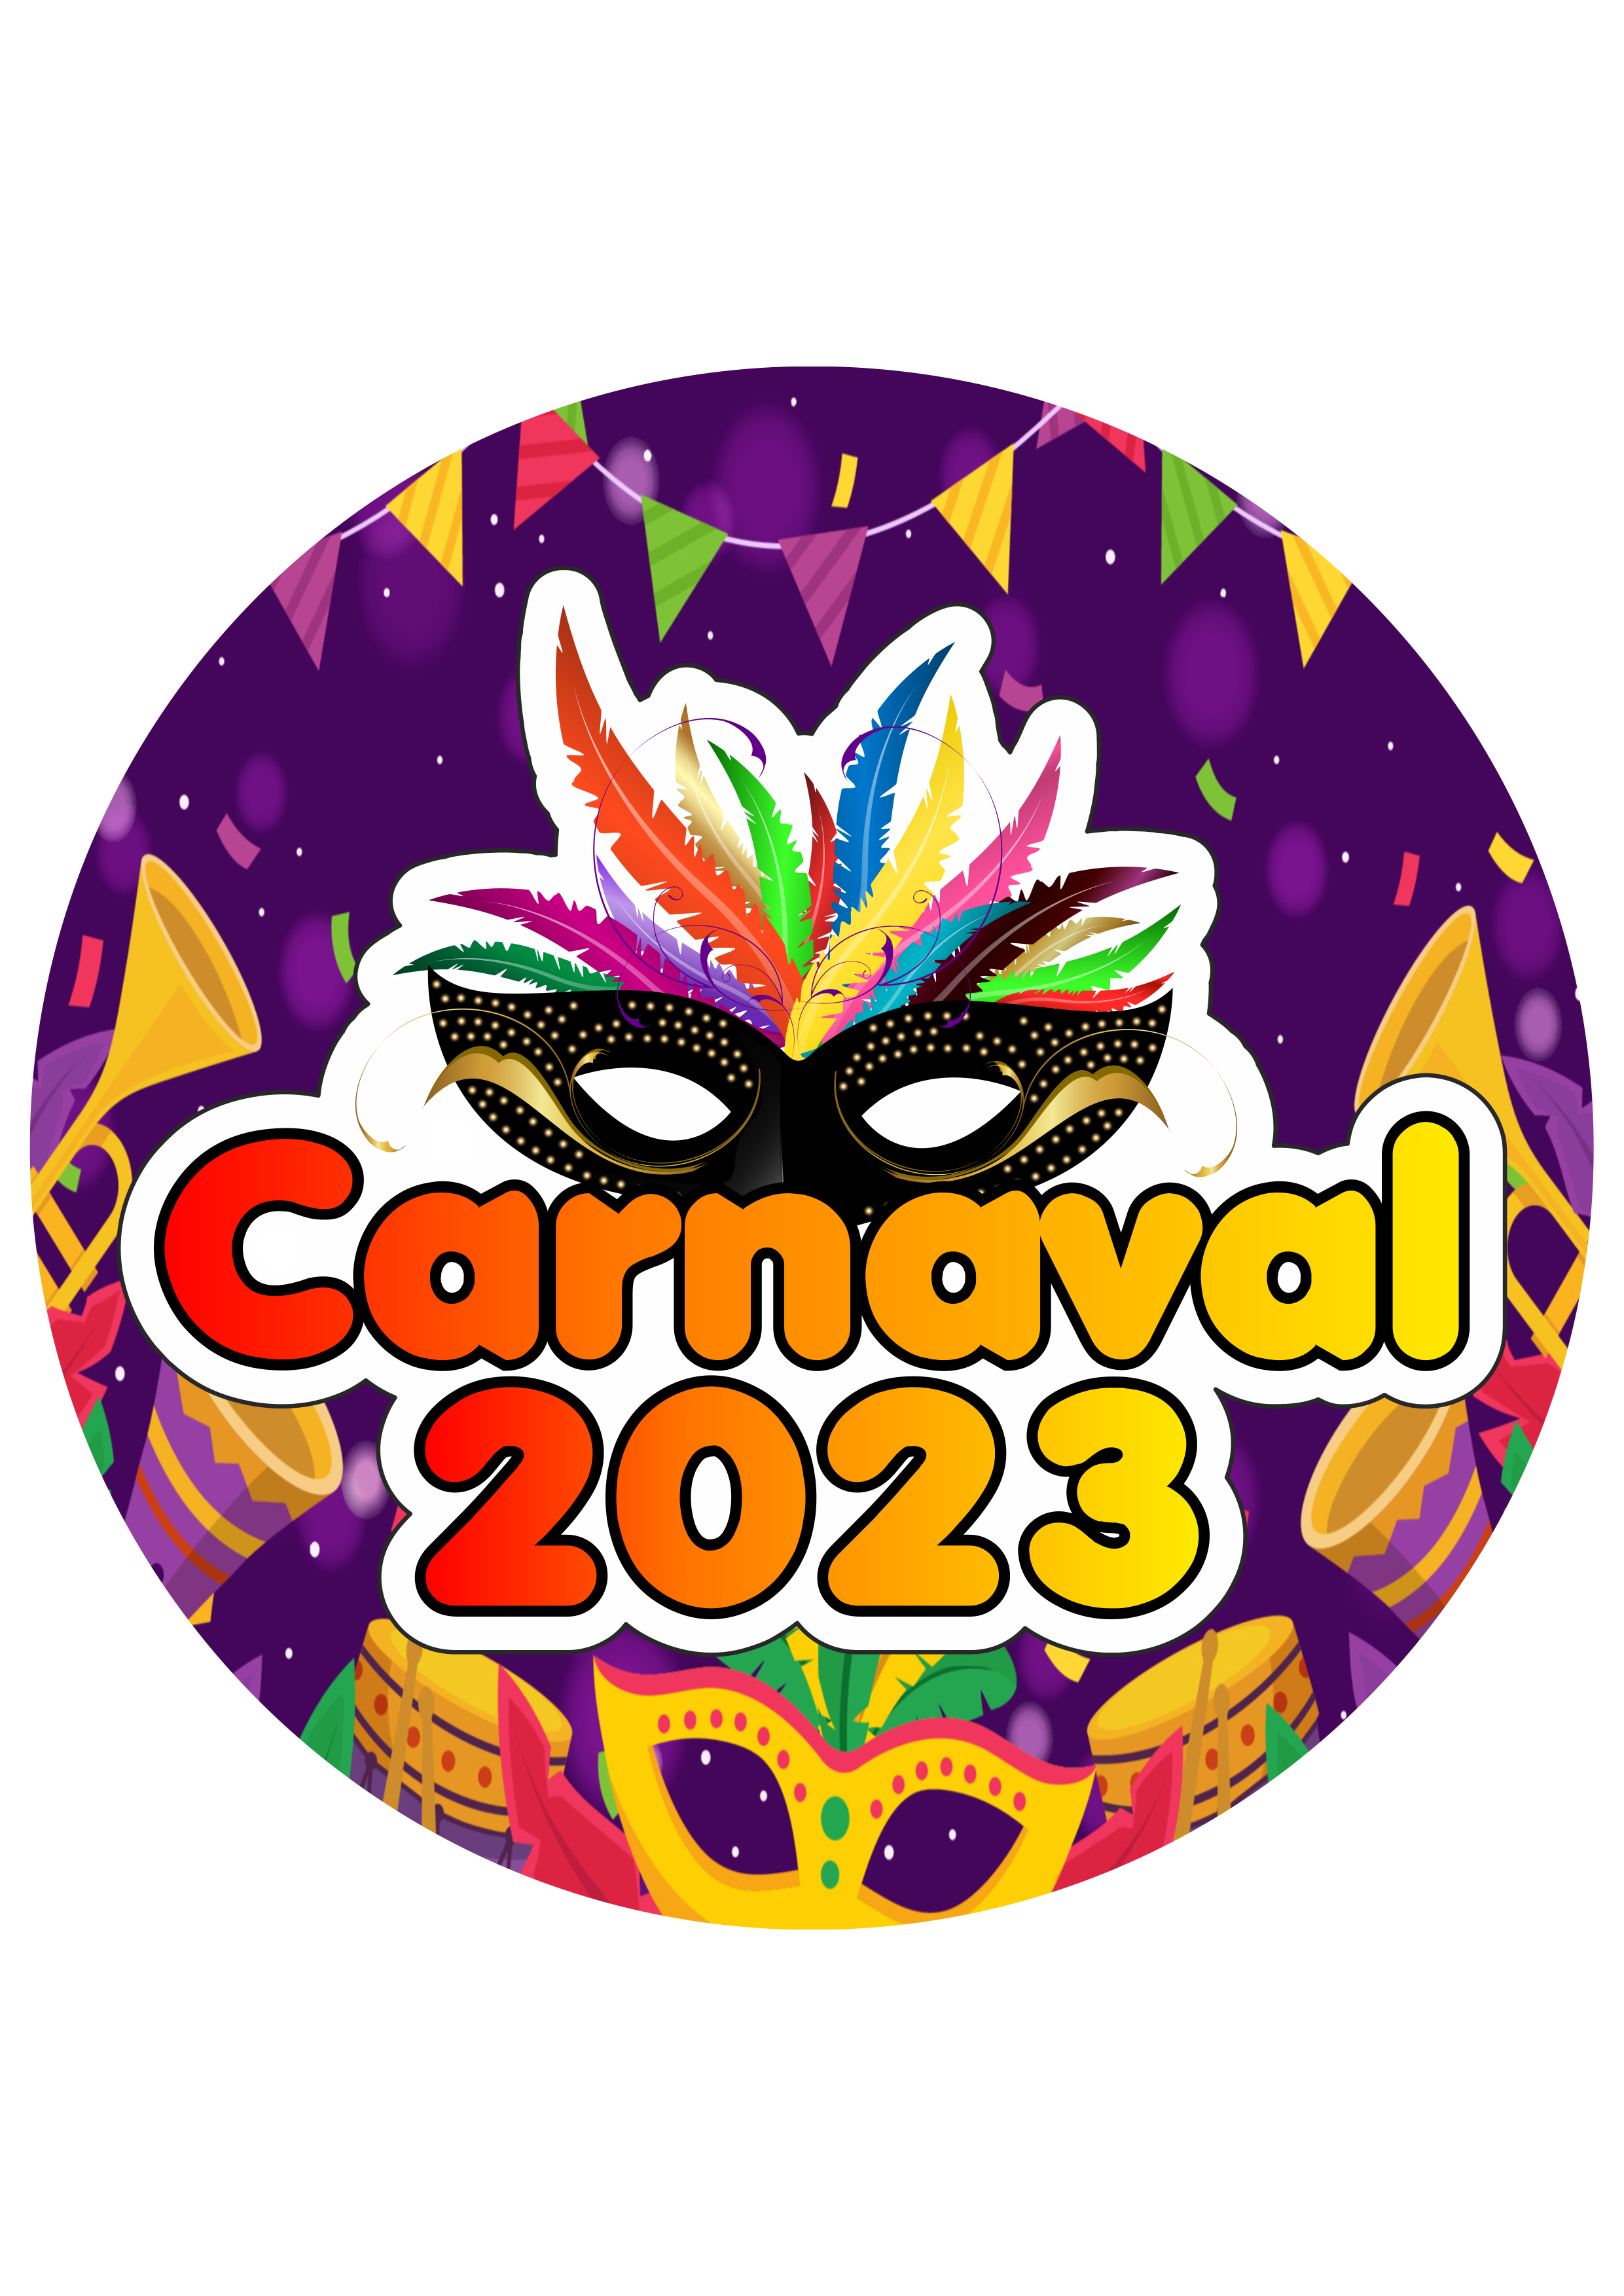 Carnaval 2023 painel redondo rótulo adesivo sticker para decoração png